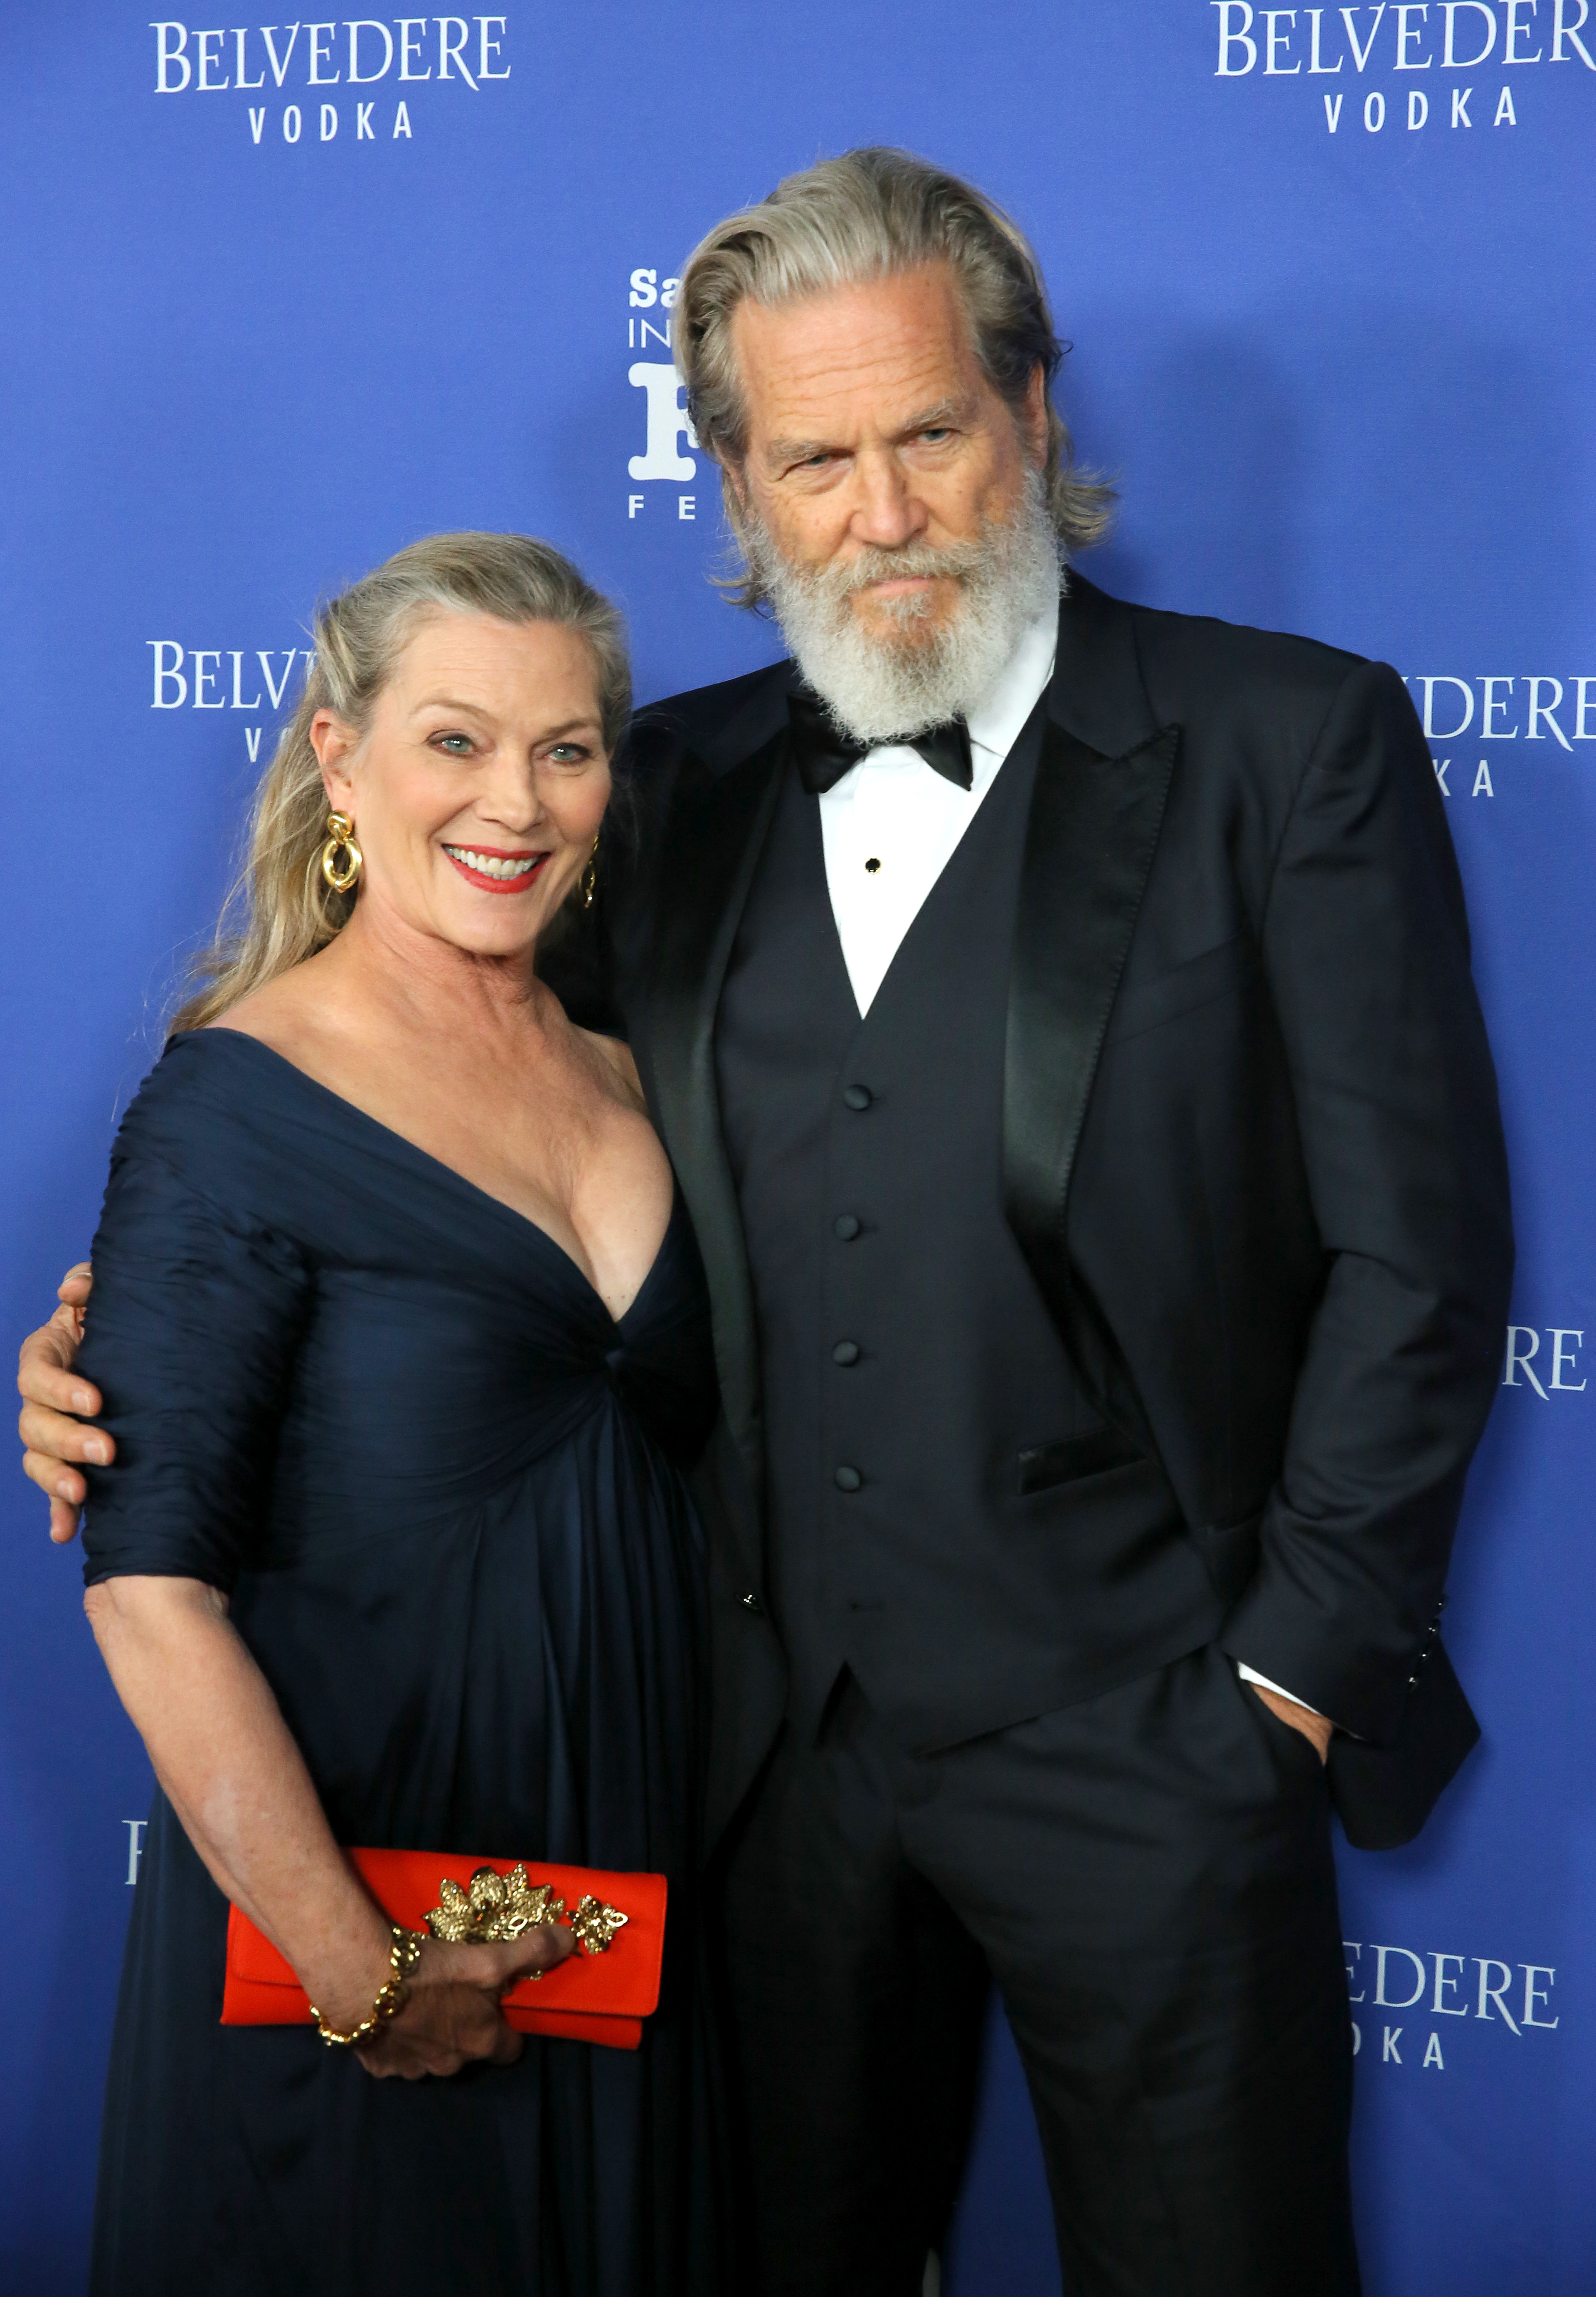 Susan and Jeff Bridges at the Santa Barbara International Film Festival Kirk Douglas Award of Excellence Dinner on November 30, 2017, in Santa Barbara, California | Source: Getty Images